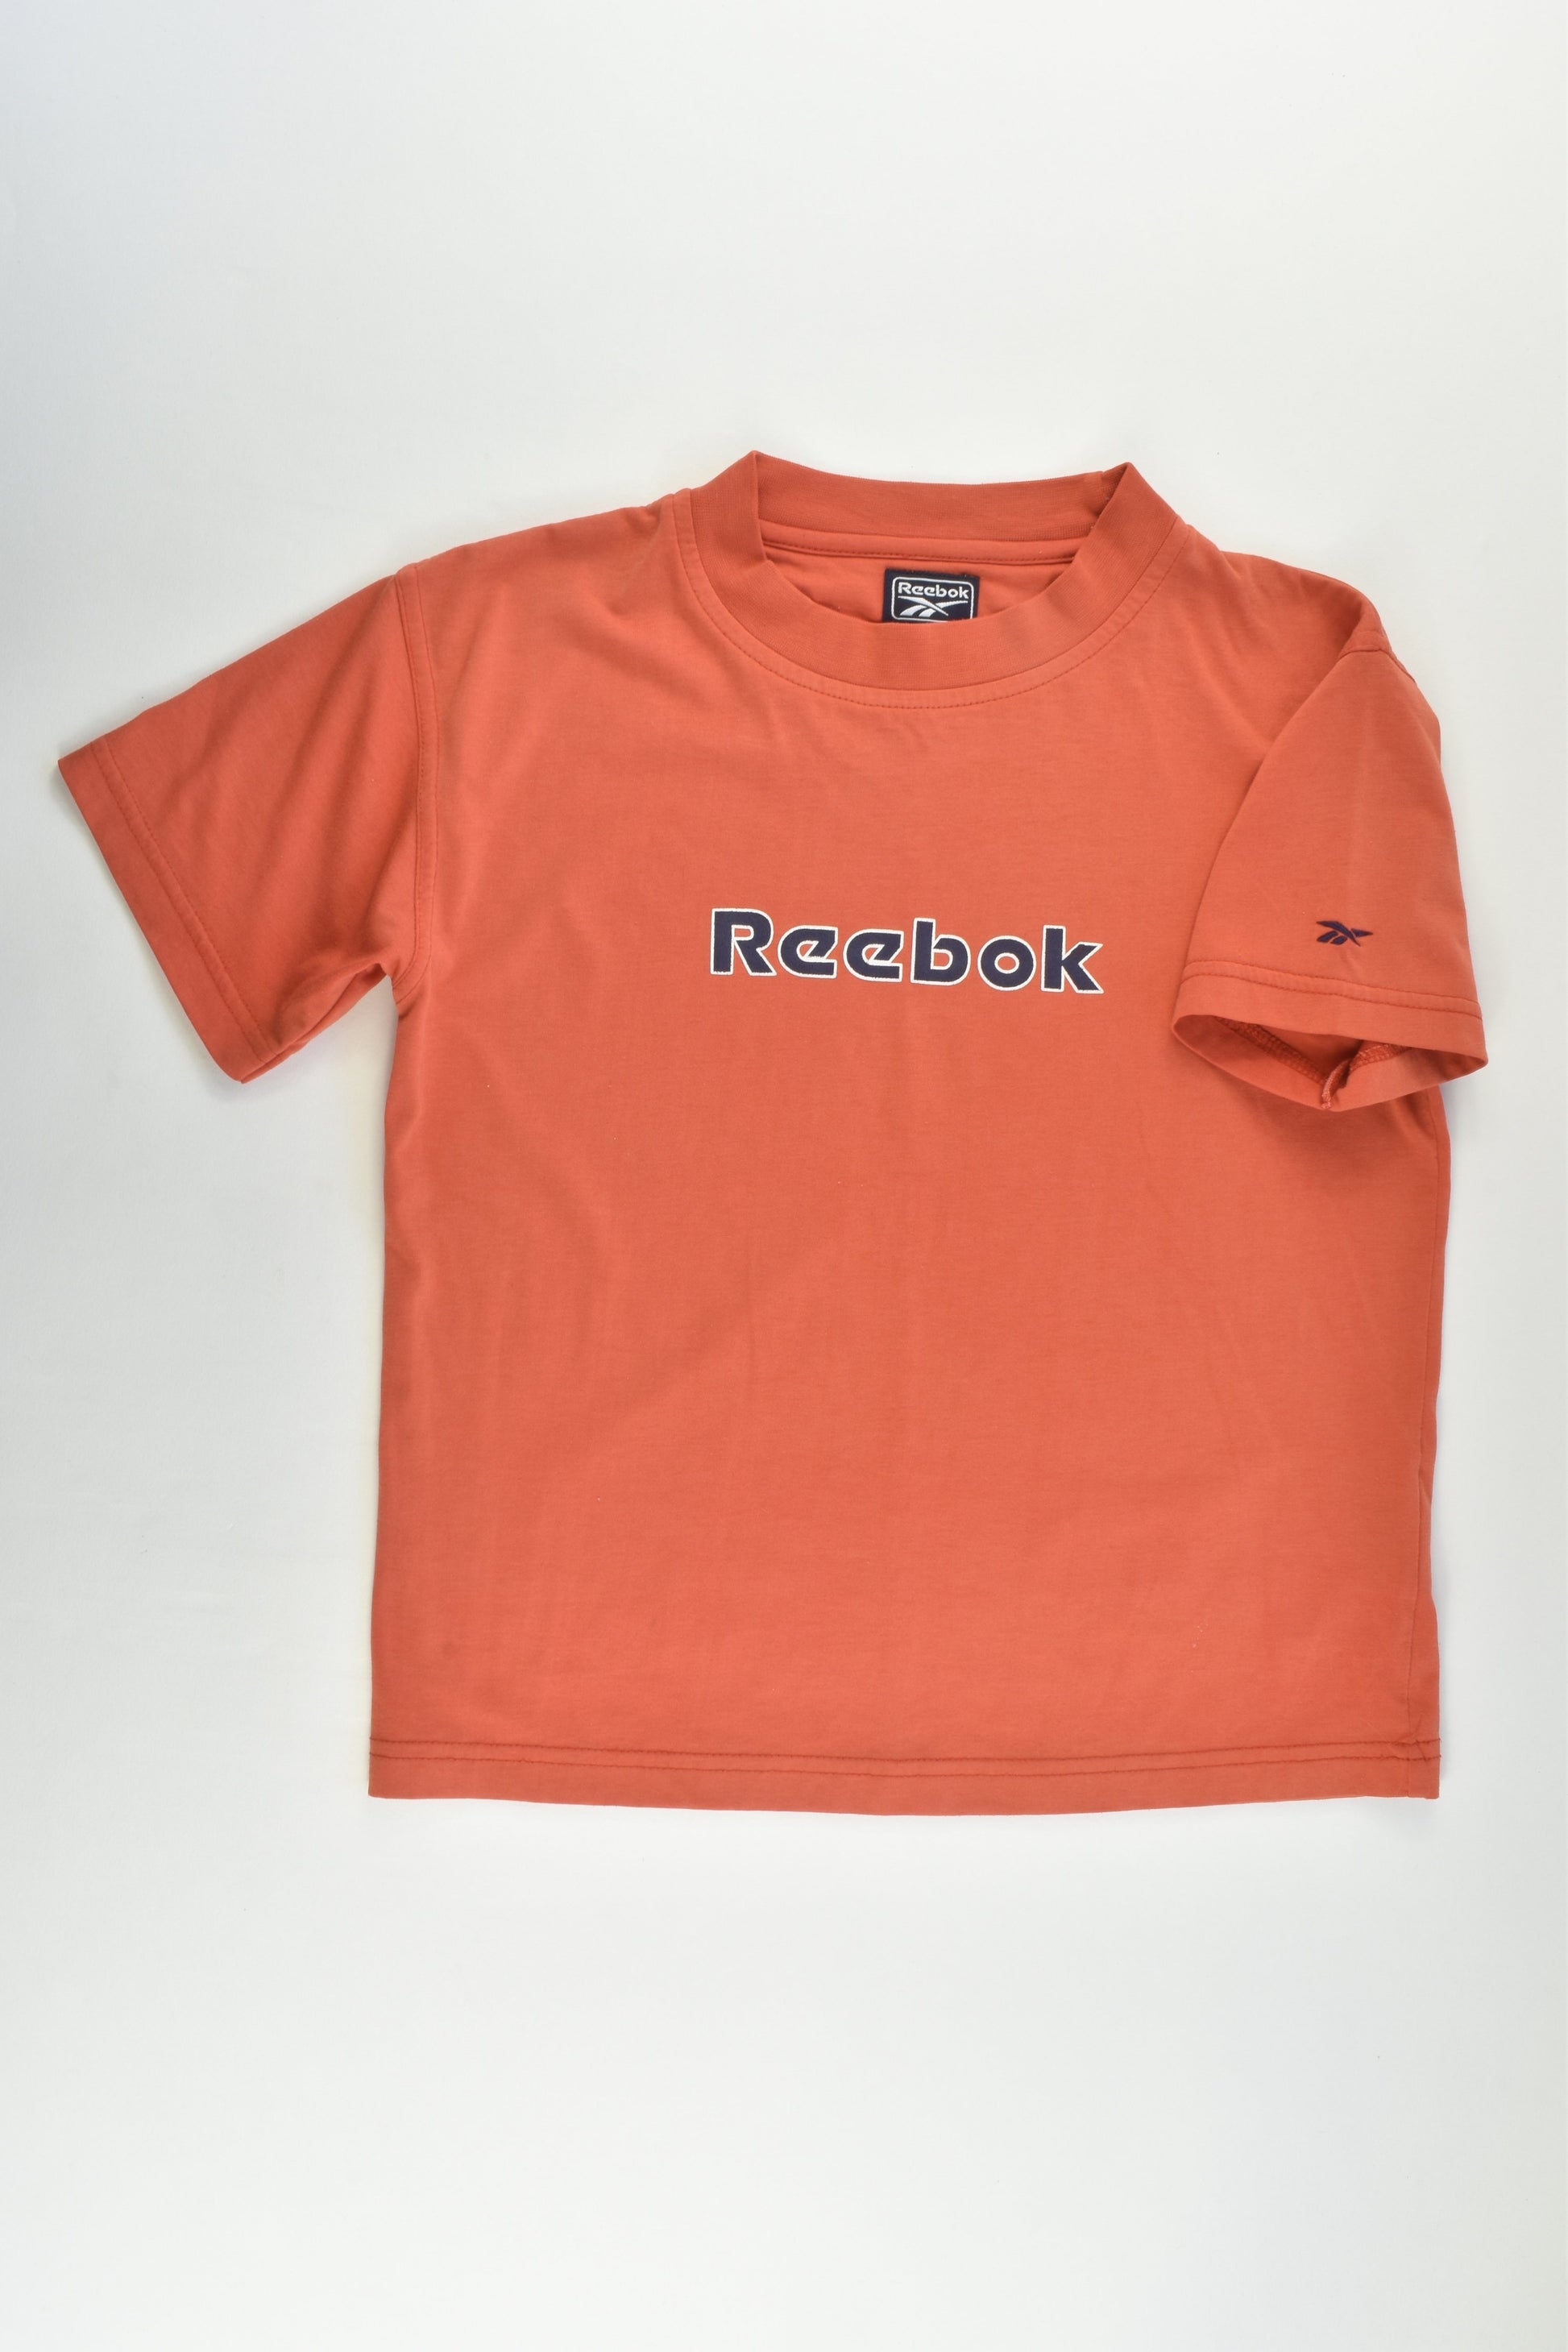 Reebok Size 7-8 T-shirt